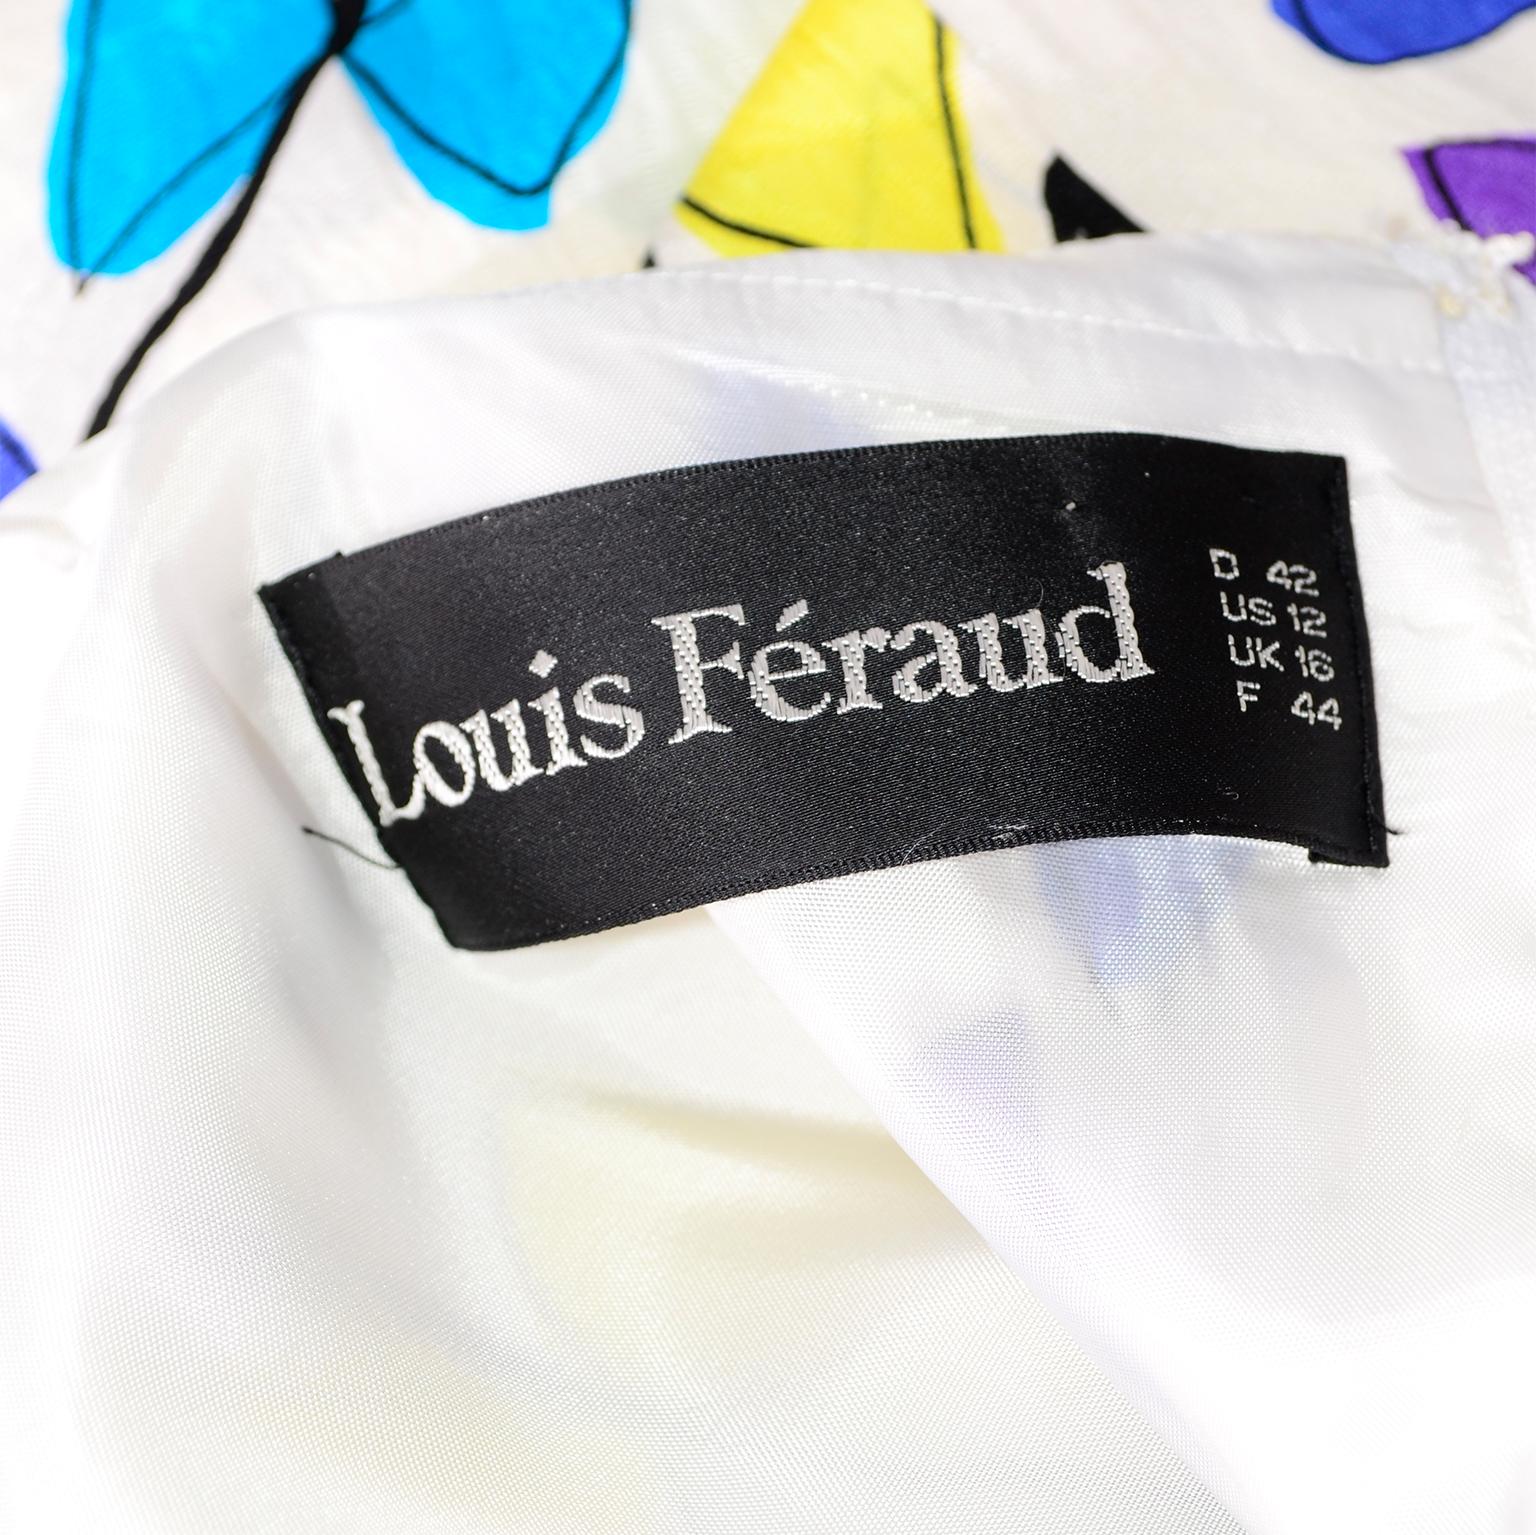 Louis Feraud Vintage Silk Dress in Colorful Kite String Bow Print 2